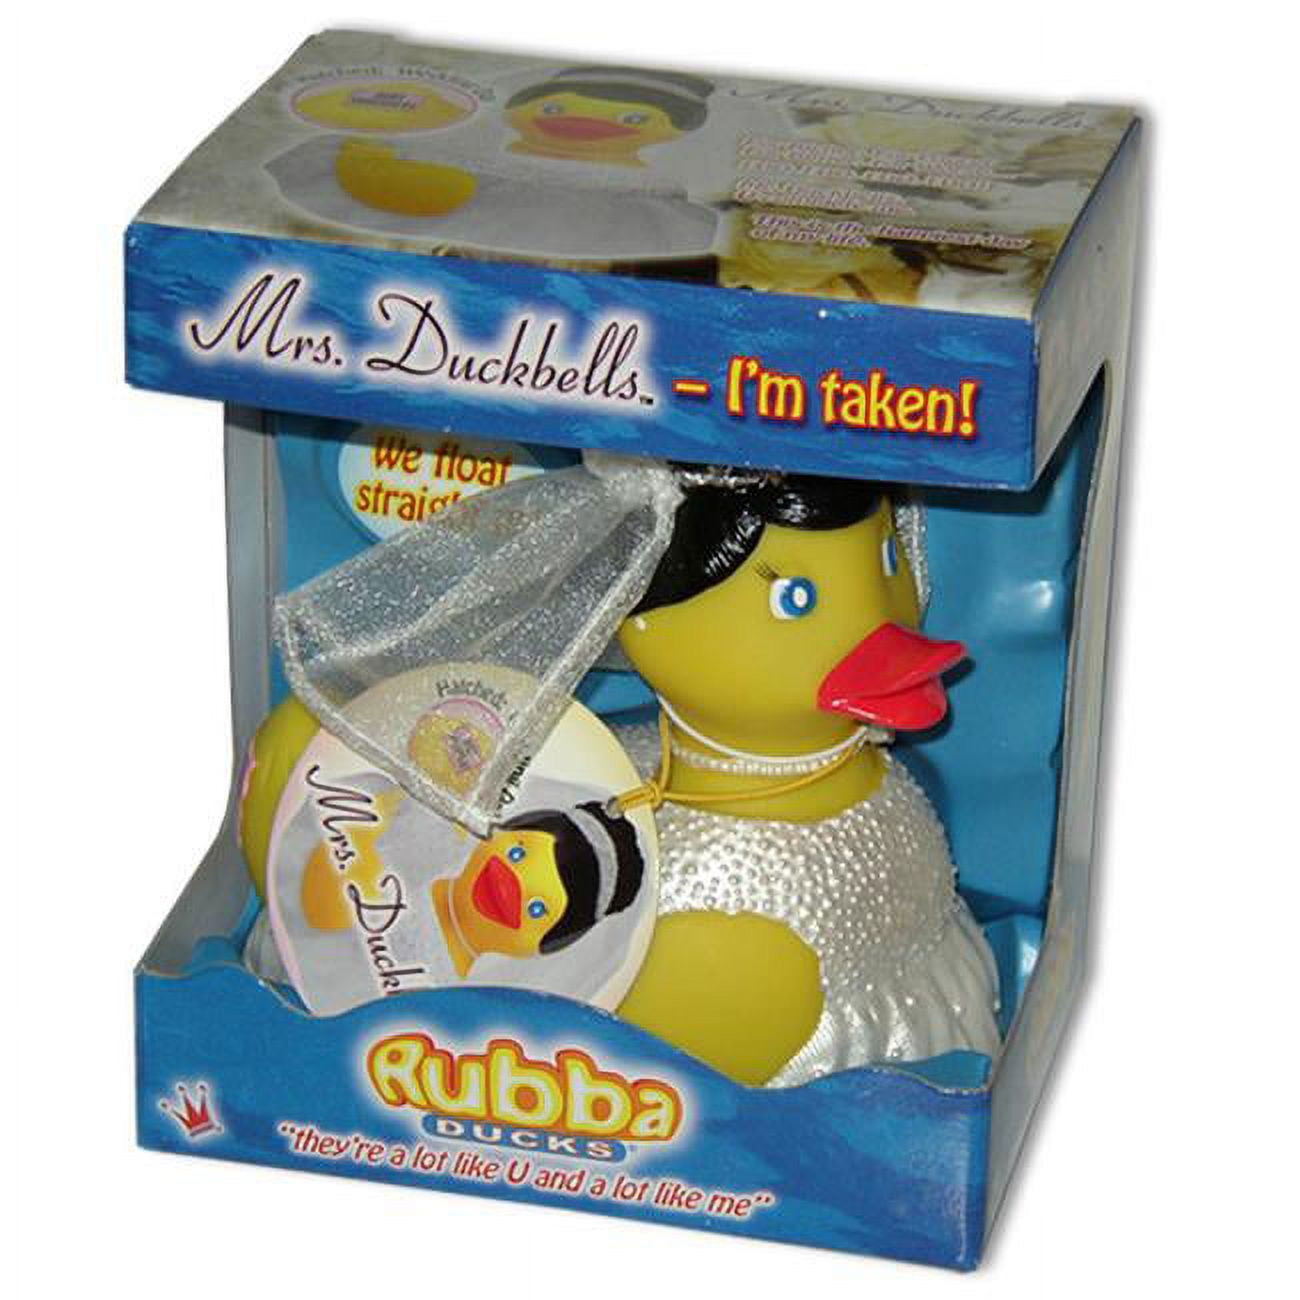 Rubba Ducks RD00066 Mrs Duckbells Gift Box